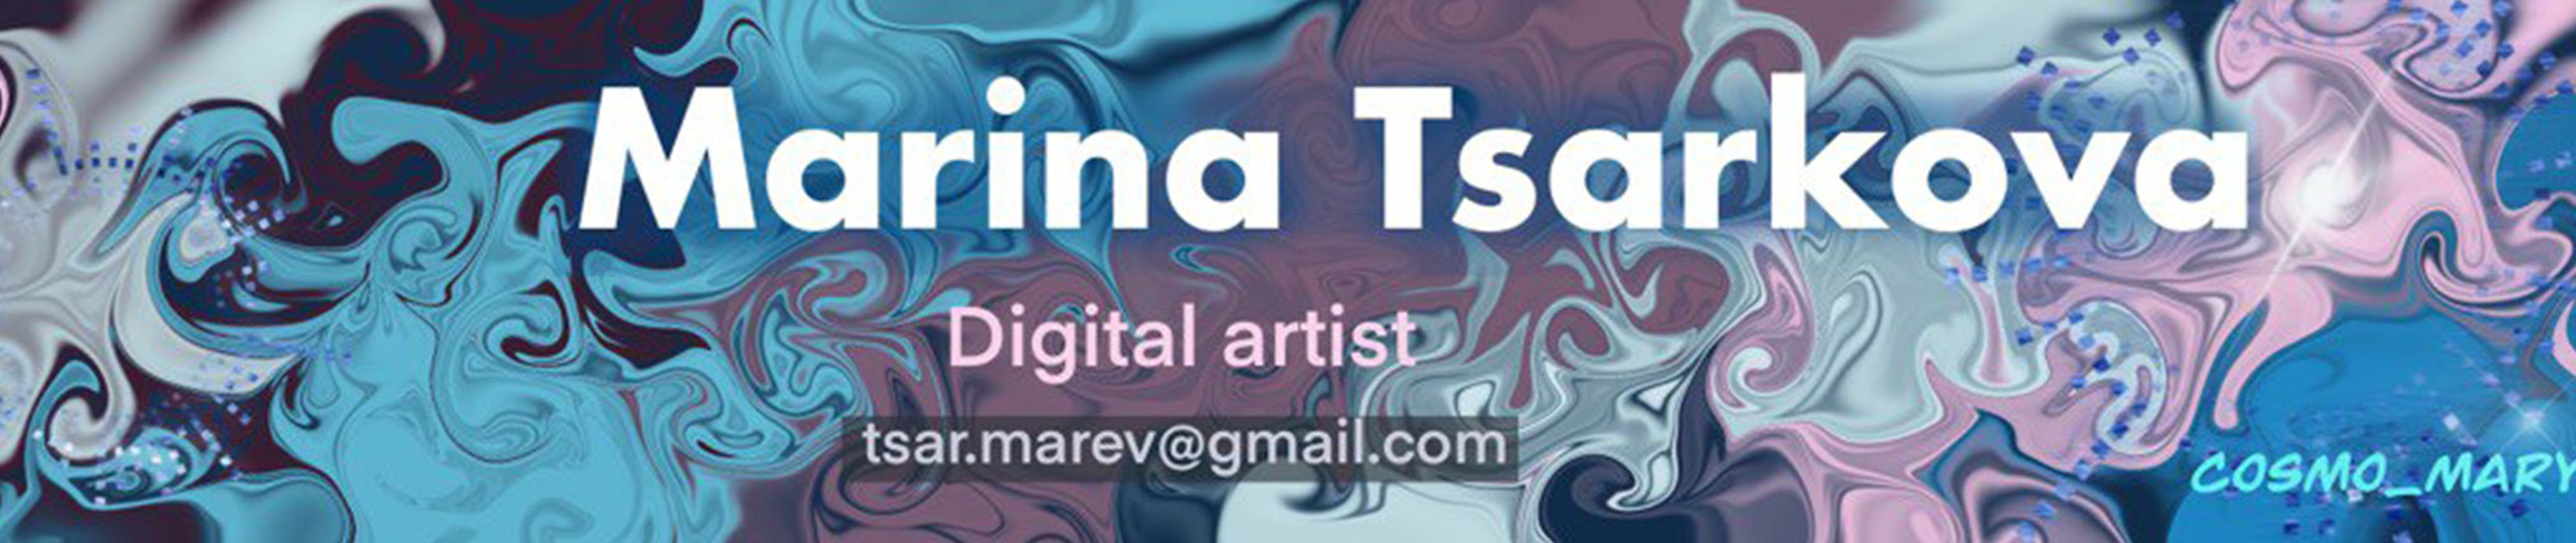 Marina Tsarkova's profile banner